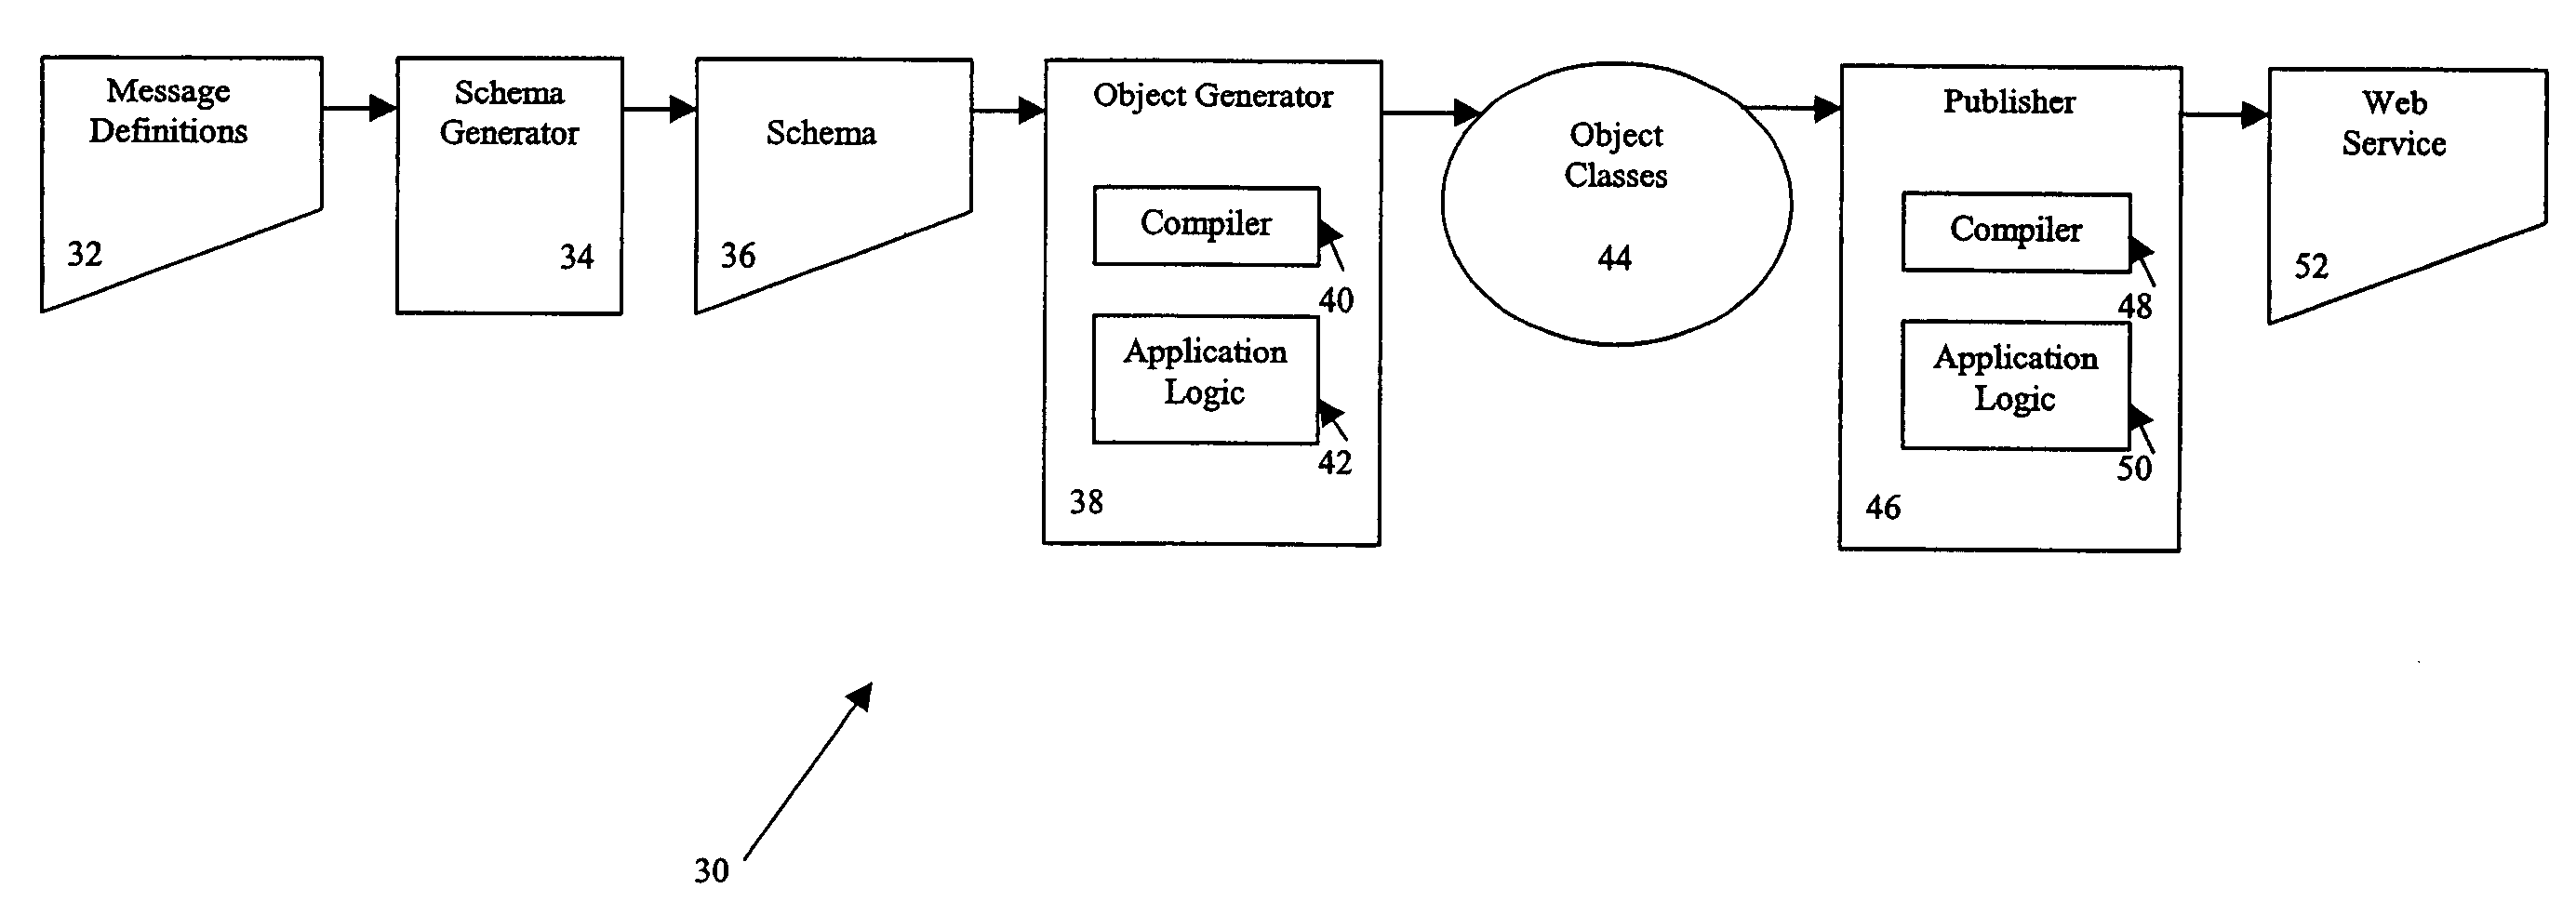 Transaction processing architecture